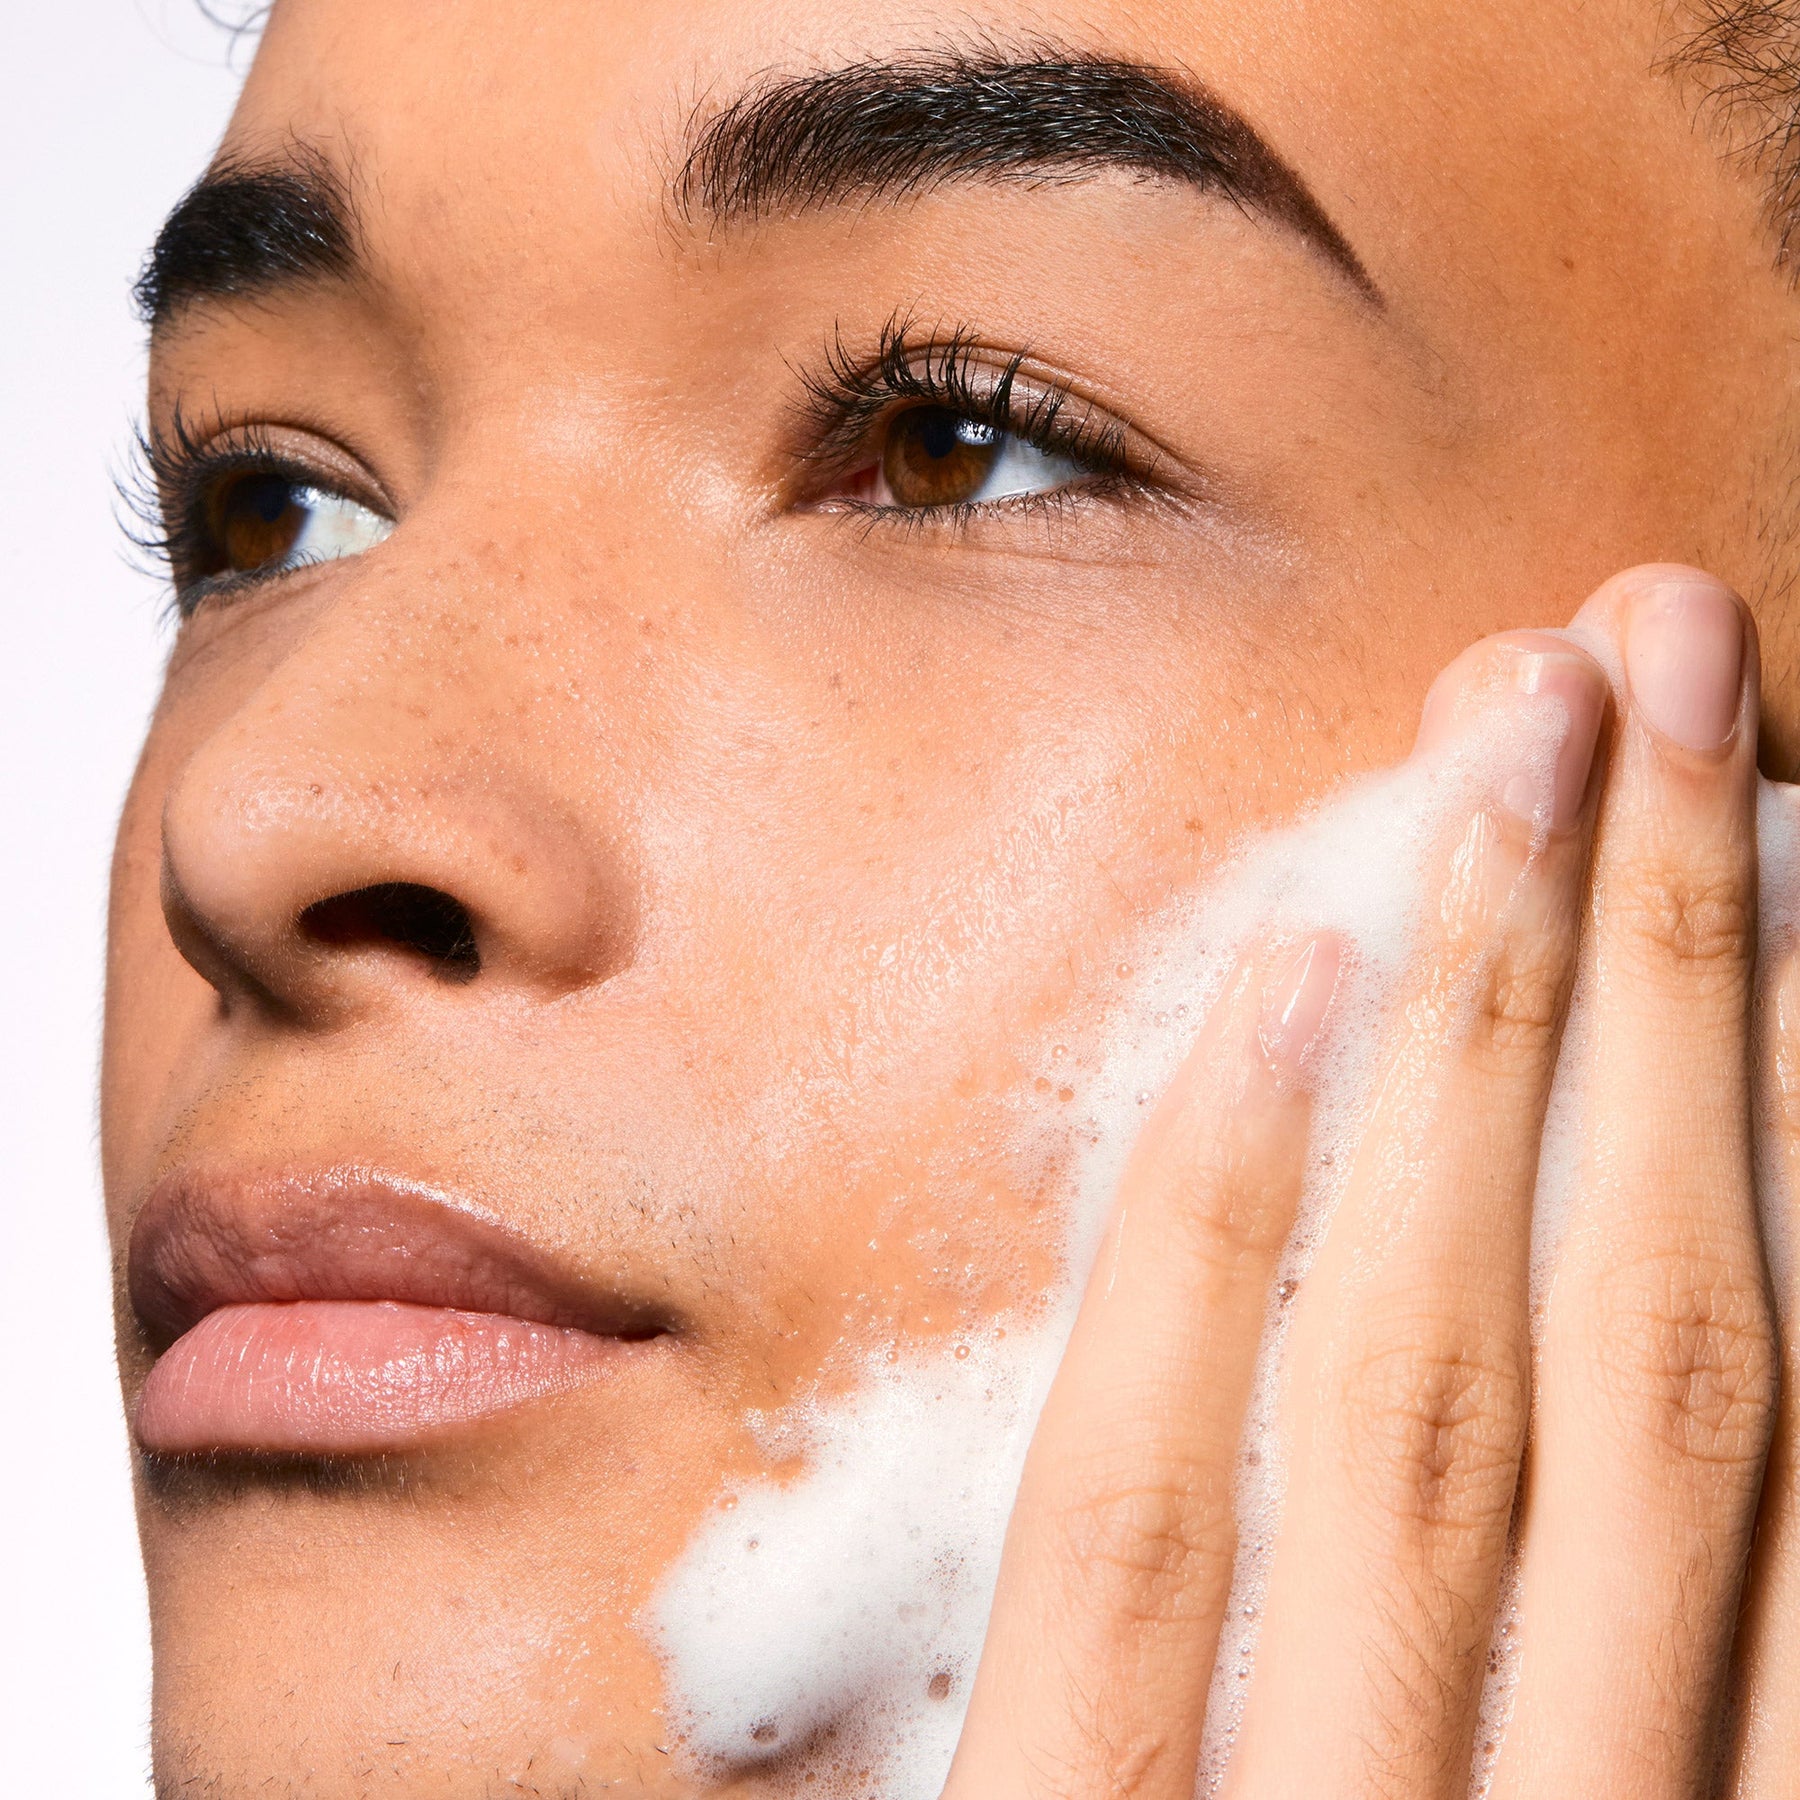 Vegan Ceramide Extra Gentle Face Wash - Skin Care - Pacifica Beauty